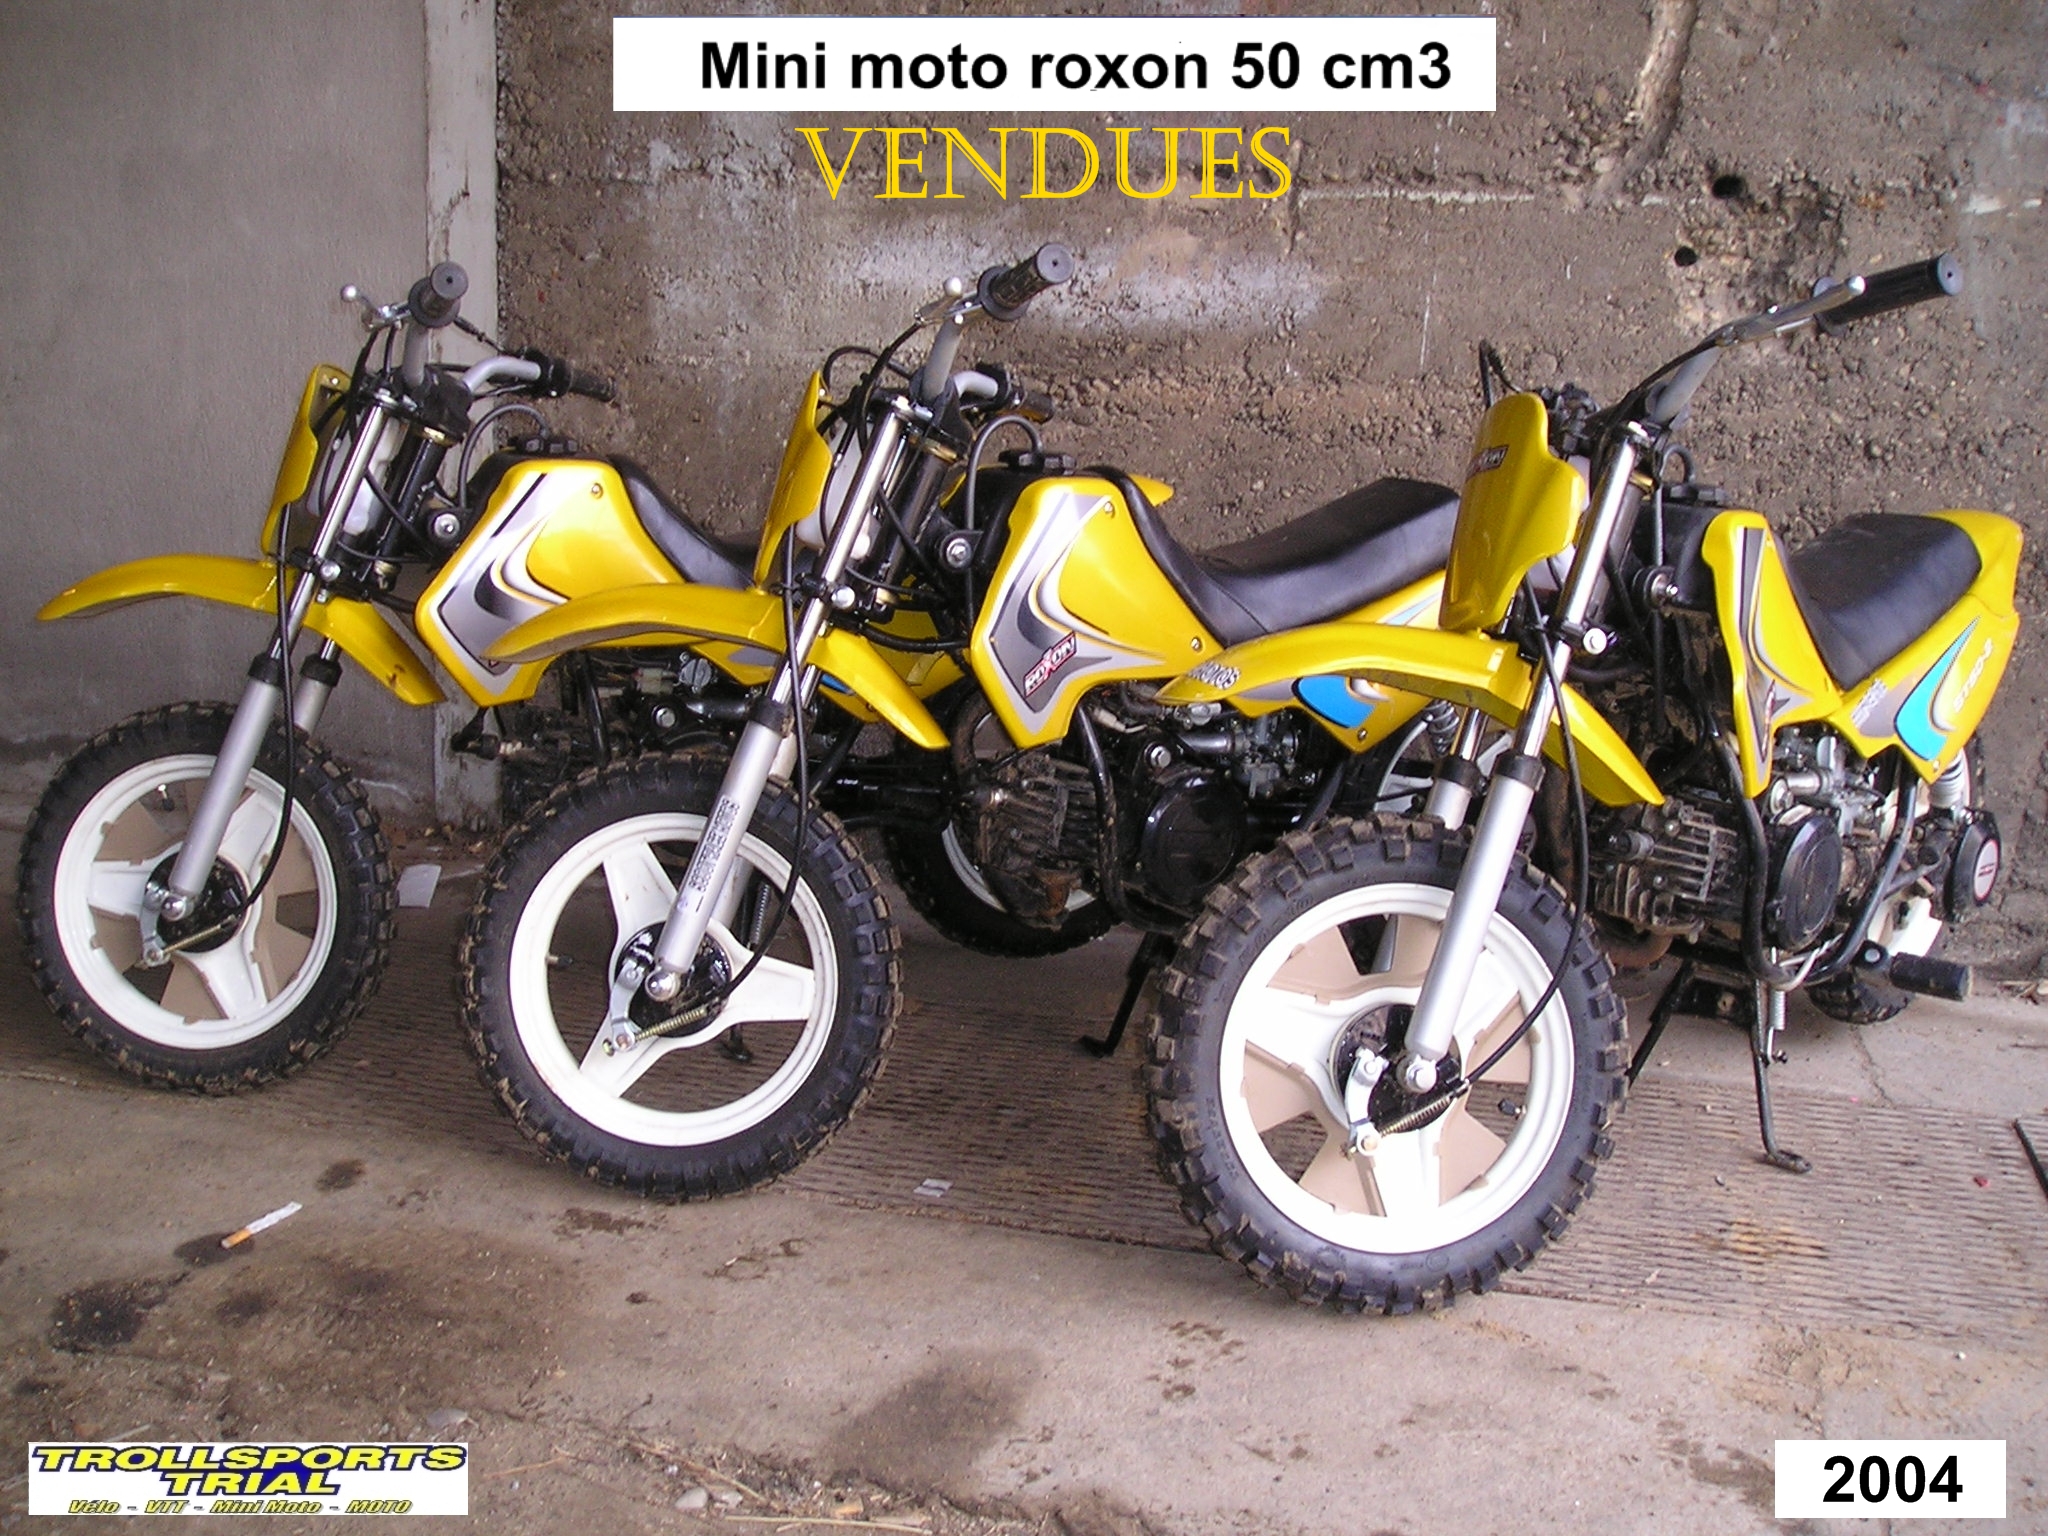 equipements/img/2004 mini moto roxon.jpg